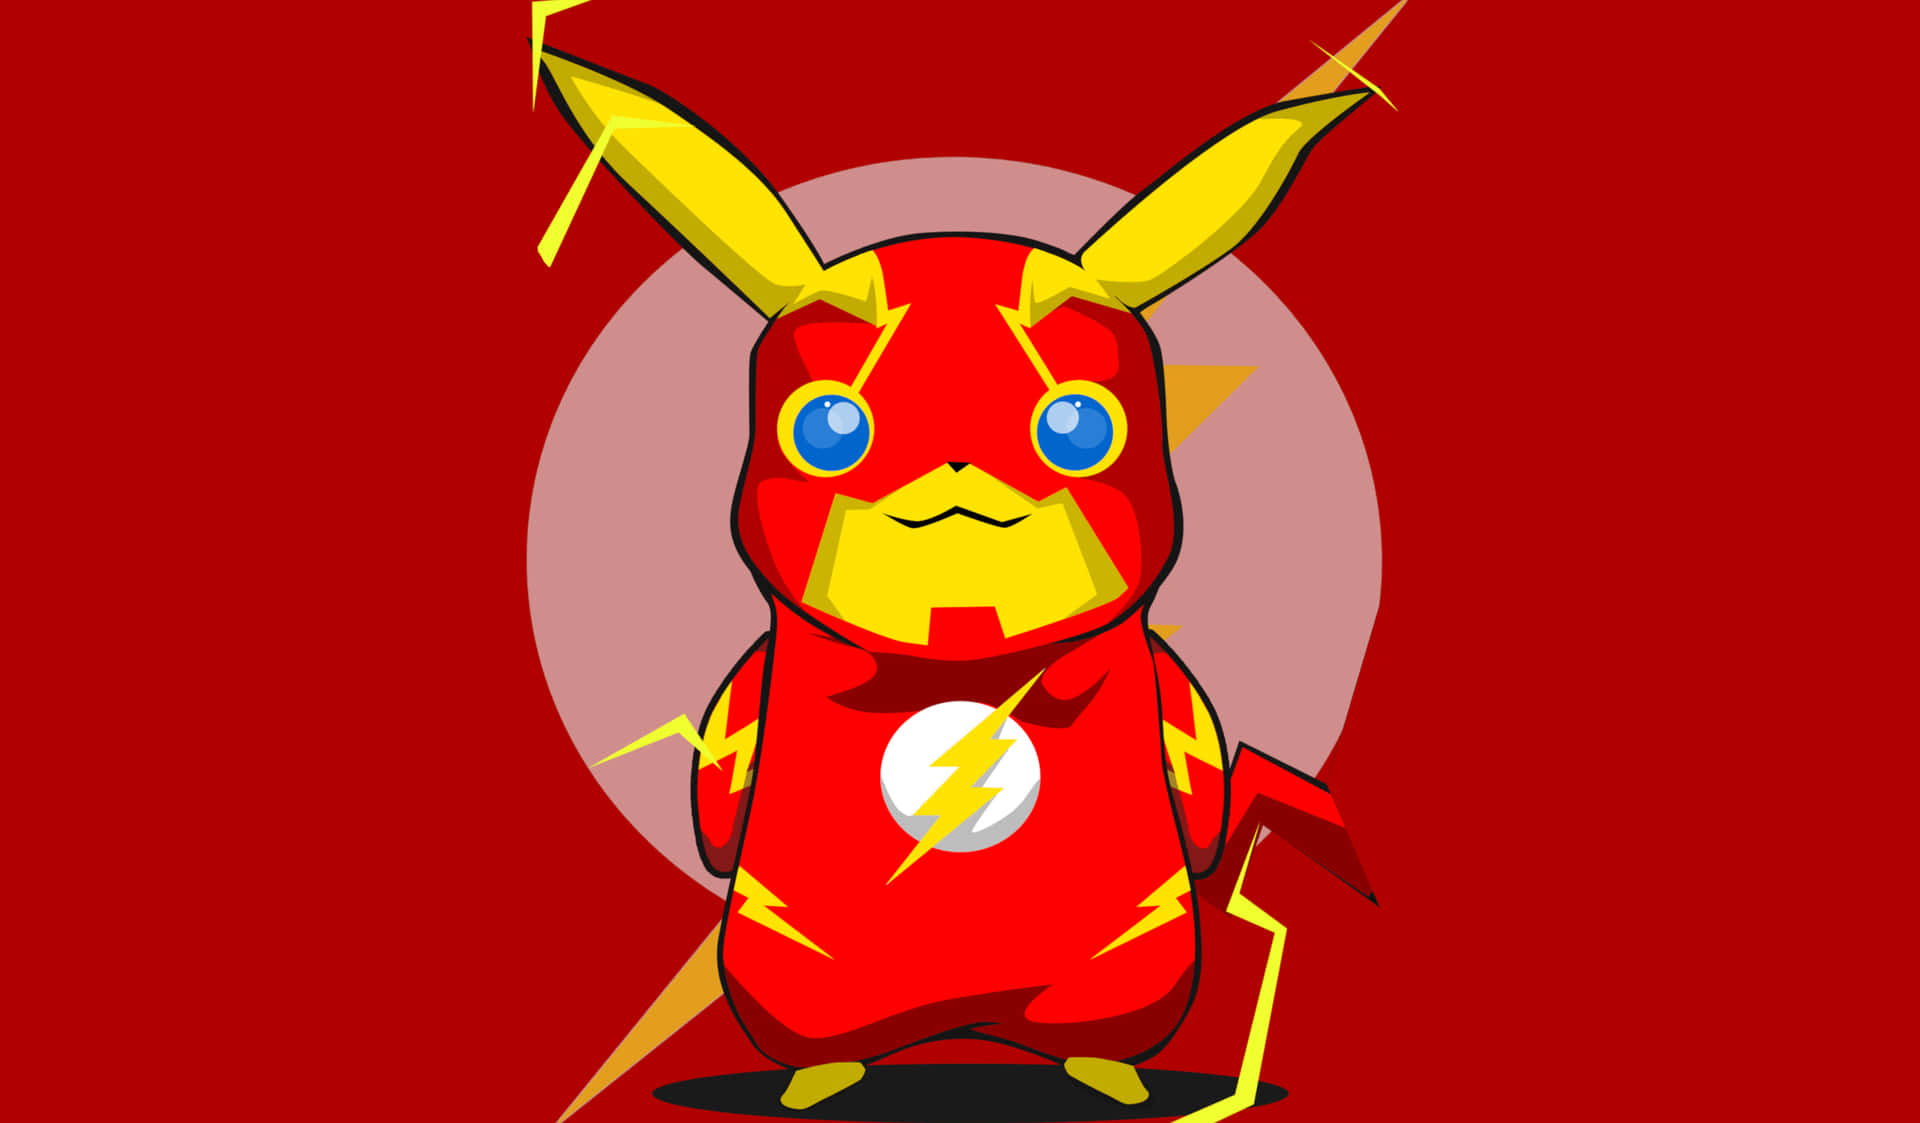 Imagende Pikachu Rojo En Fanfiction